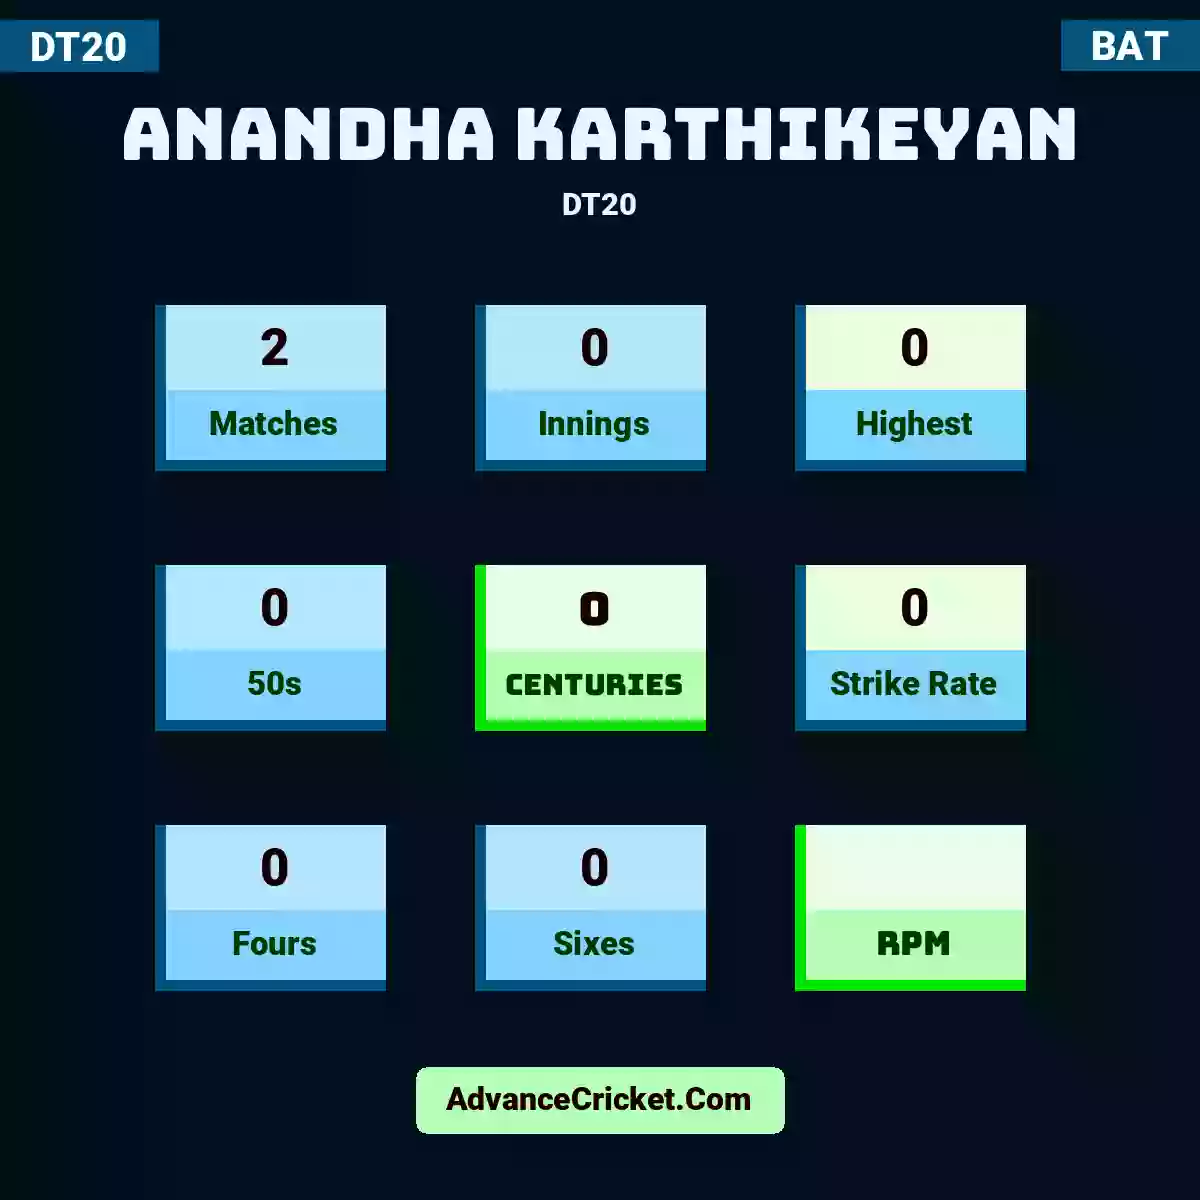 Anandha Karthikeyan DT20 , Anandha Karthikeyan played 2 matches, scored 0 runs as highest, 0 half-centuries, and 0 centuries, with a strike rate of 0. A.Karthikeyan hit 0 fours and 0 sixes.